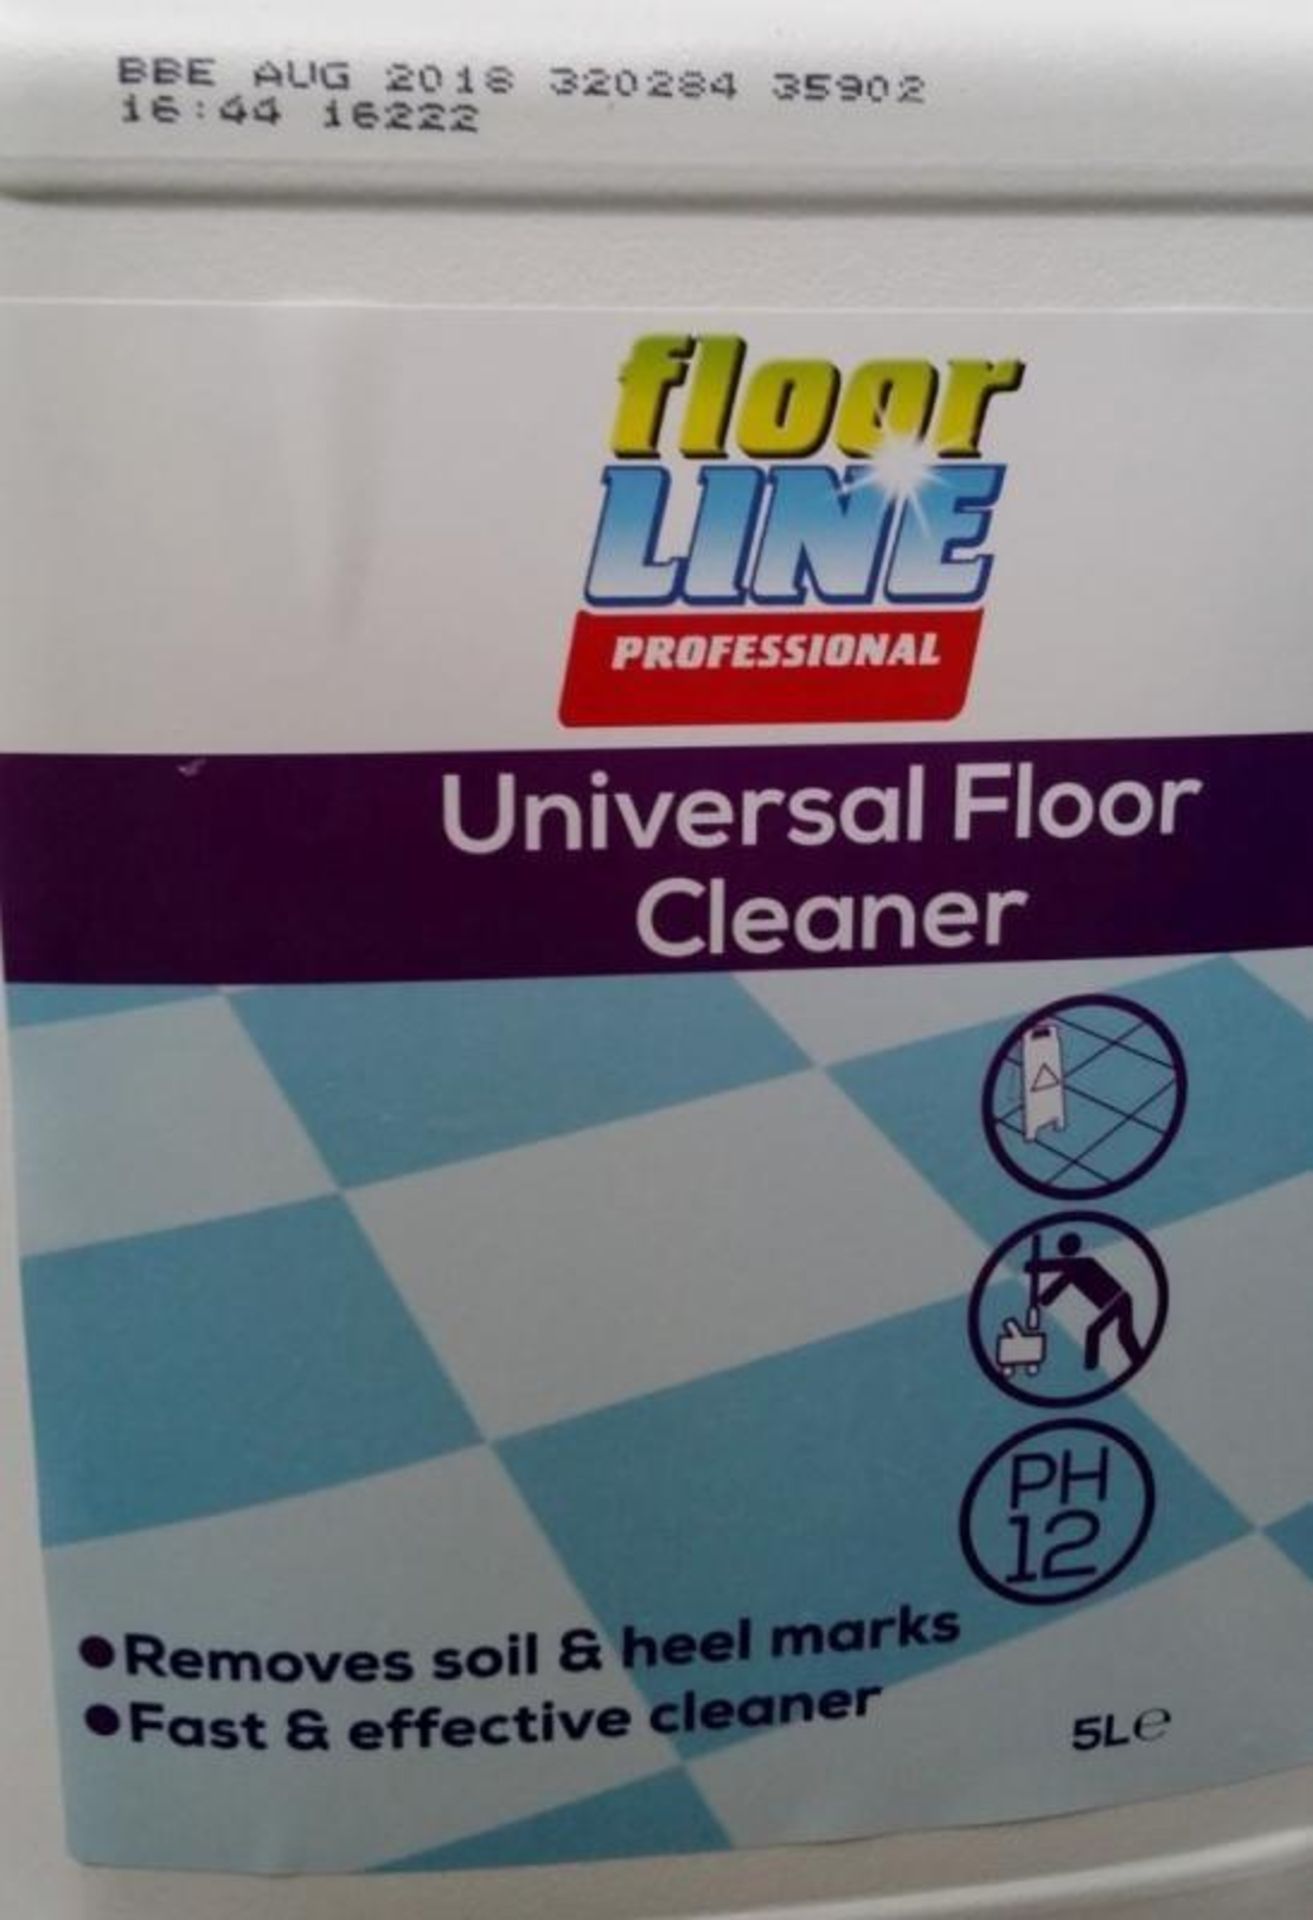 2 x Floor Line Professional 5 Litre Universal Floor Cleaner - Removes Soil & Heel Marks - Fast & Eff - Image 5 of 7